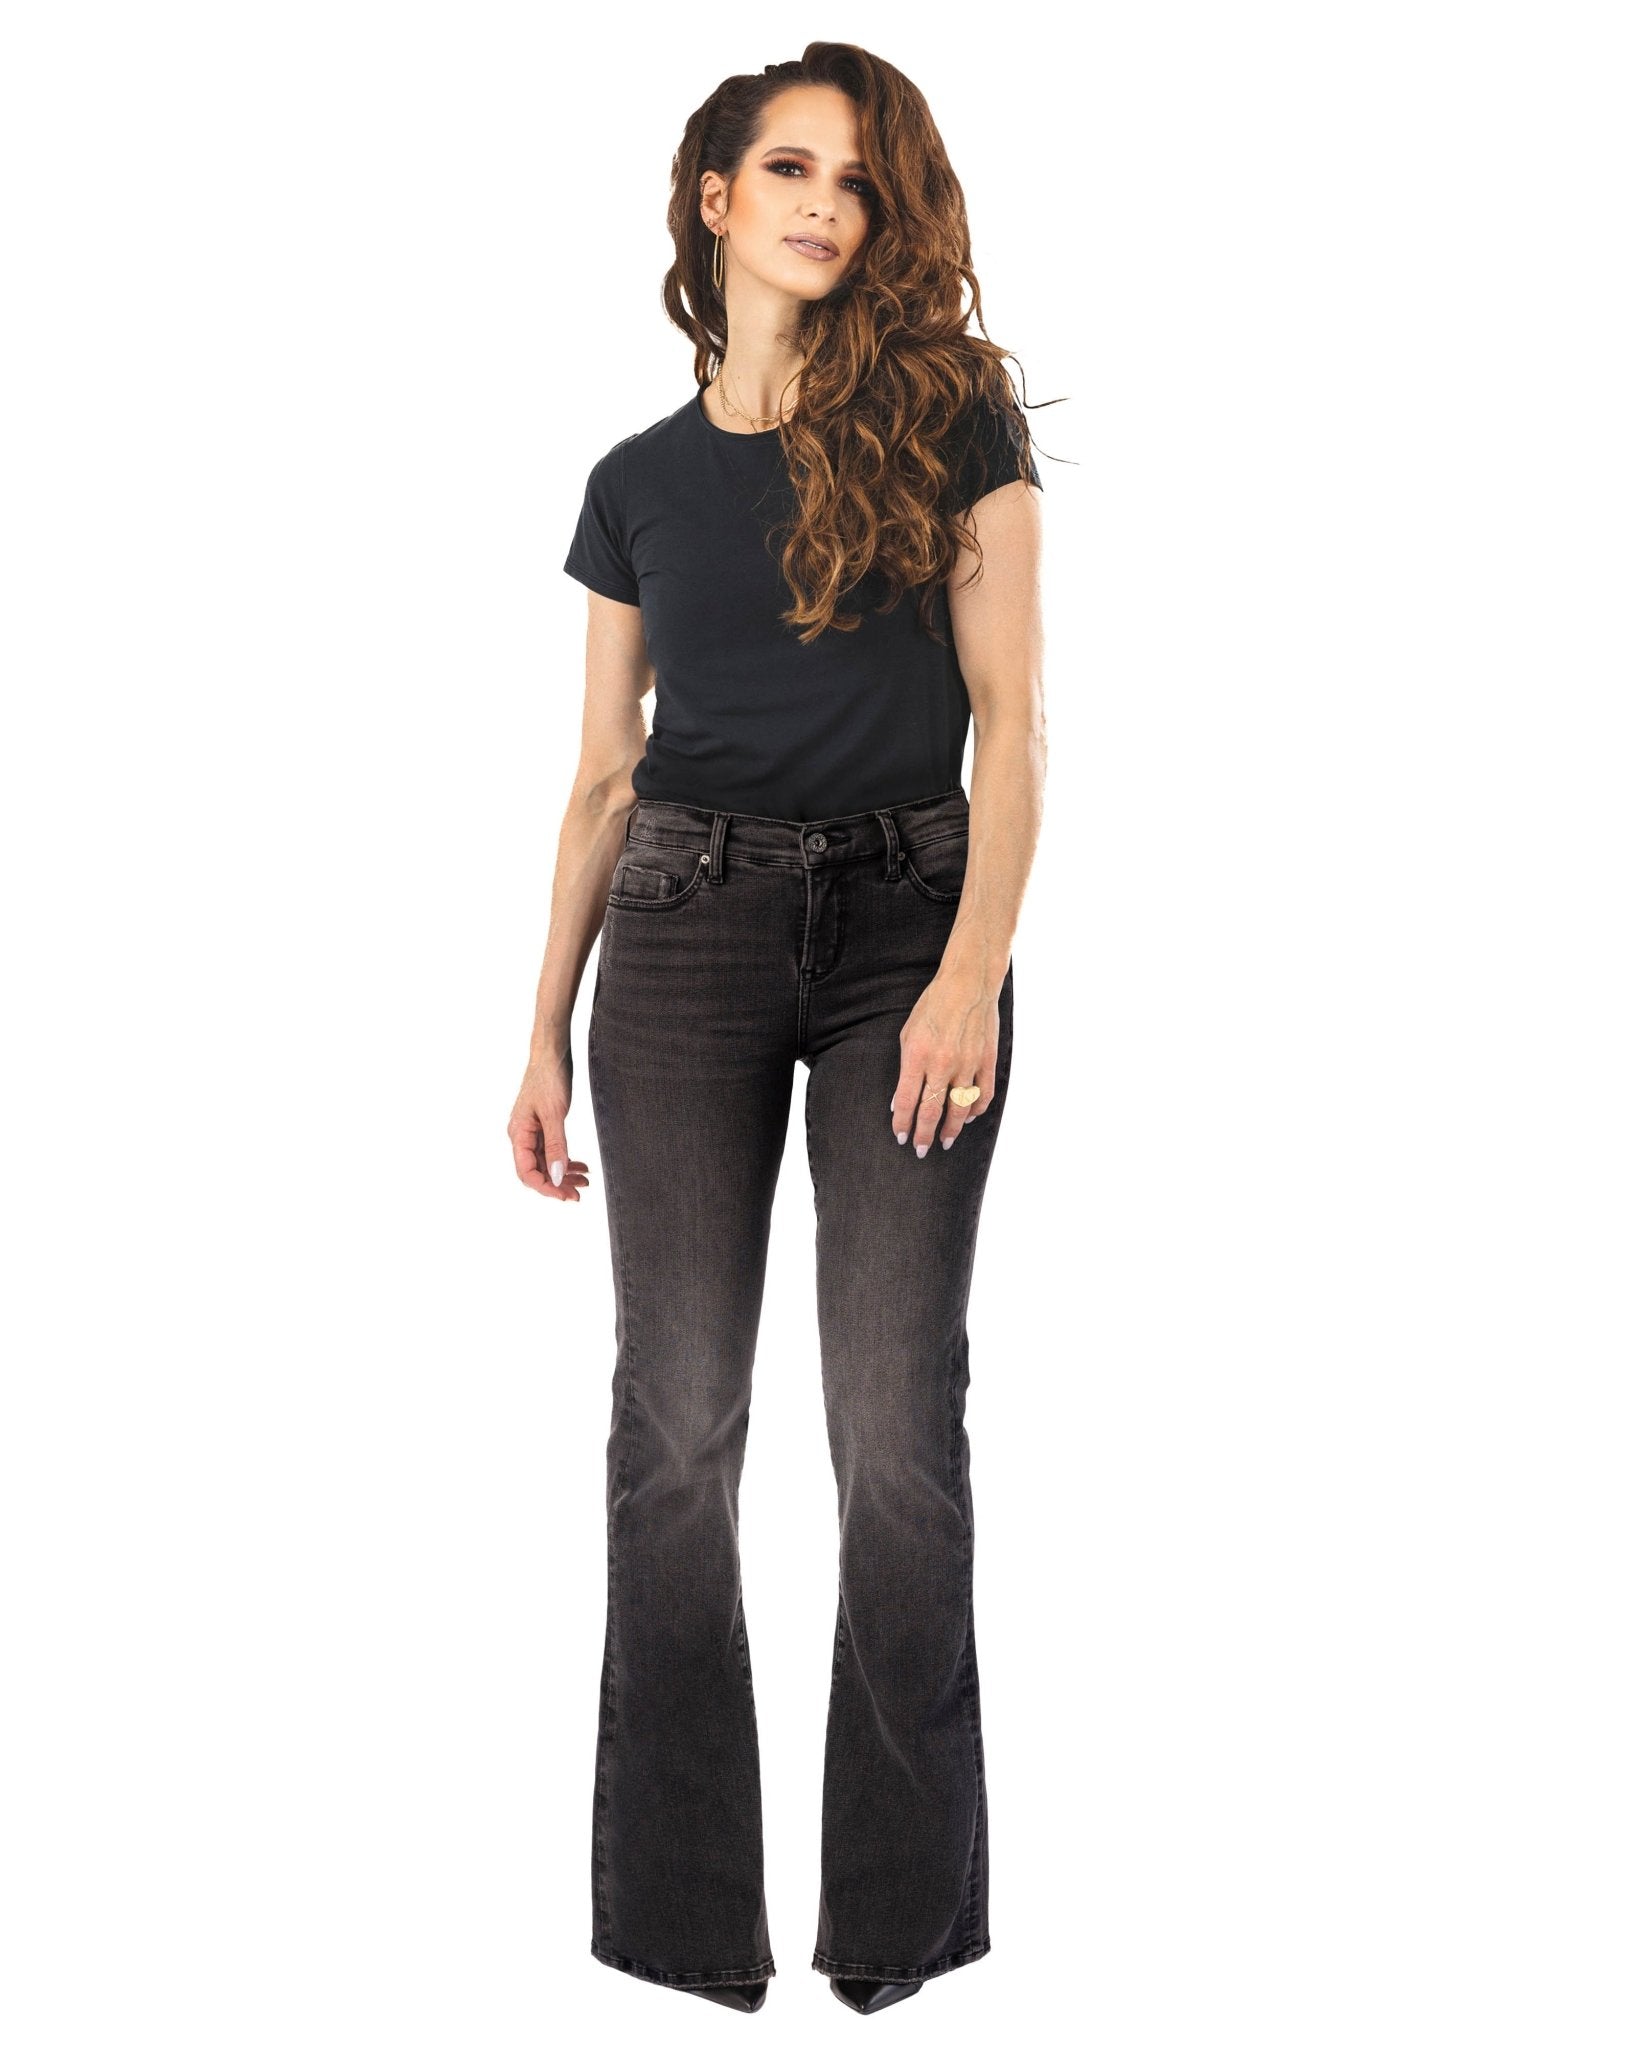 Jean, Stretchy Denim, High Waist Jeans – Nancy Rose